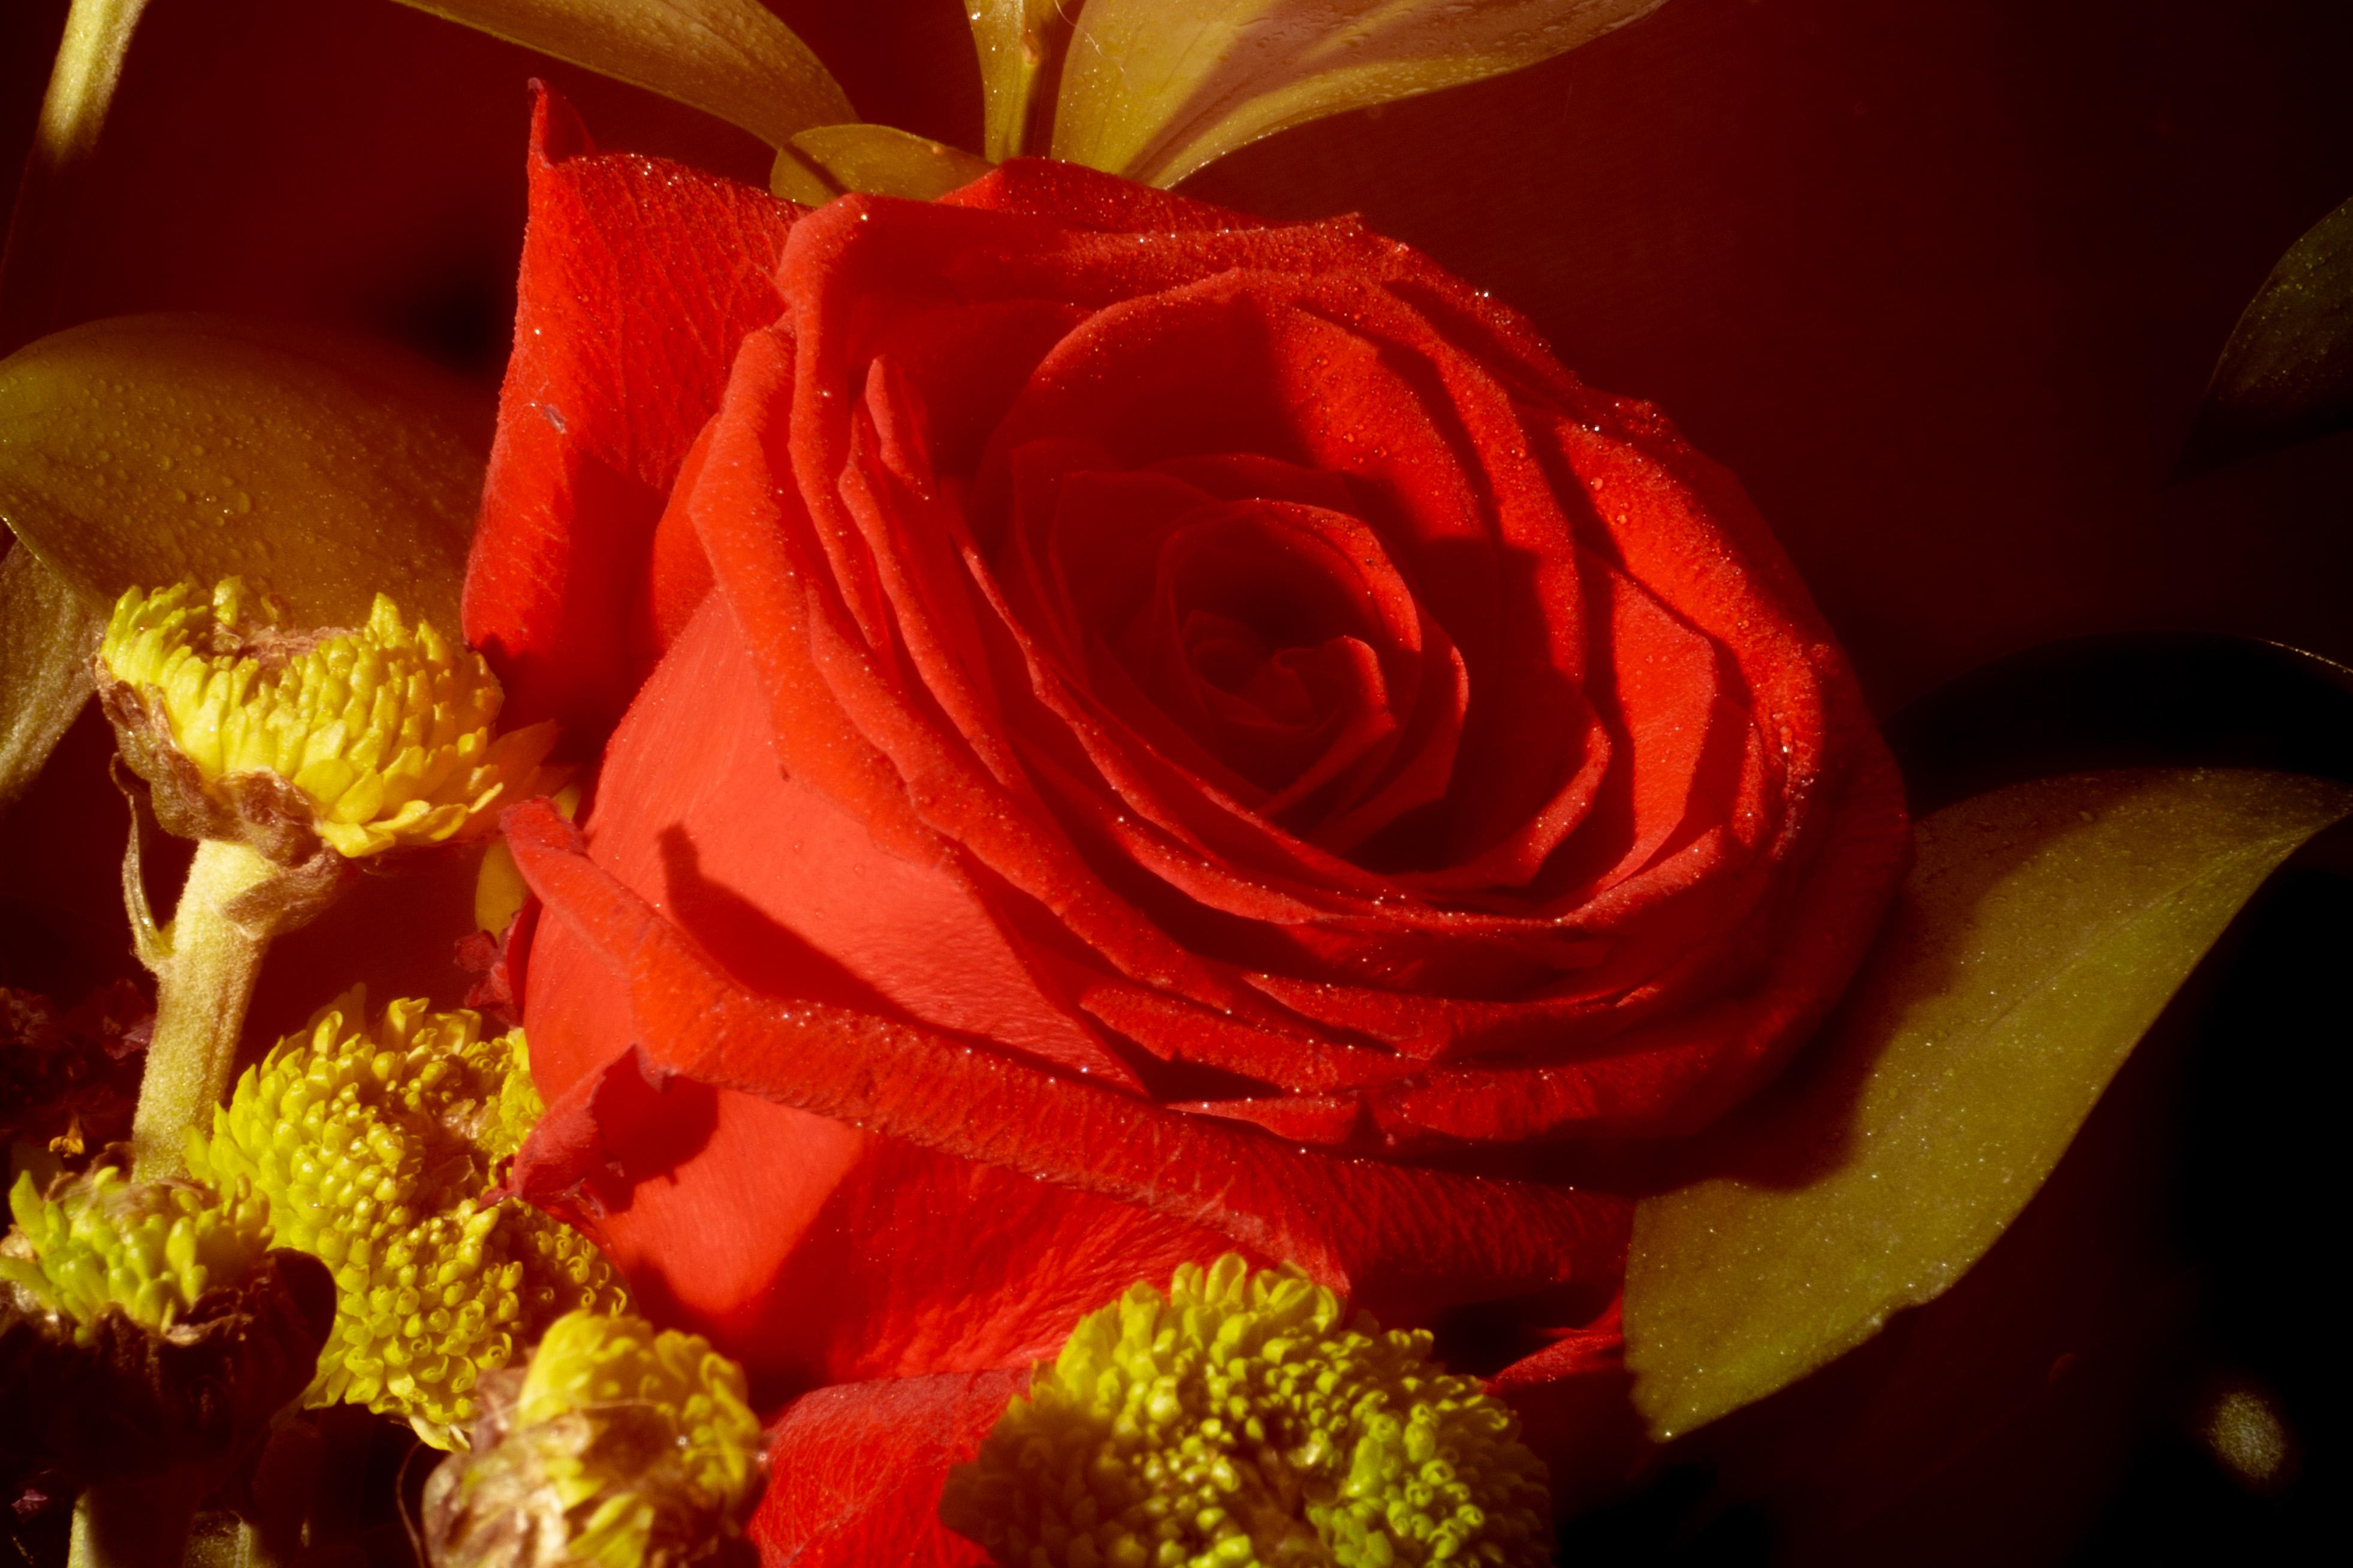 Red Rose in Vintage Light, Limited Edition Giclée Print, Vertical Still Life  For Sale 1